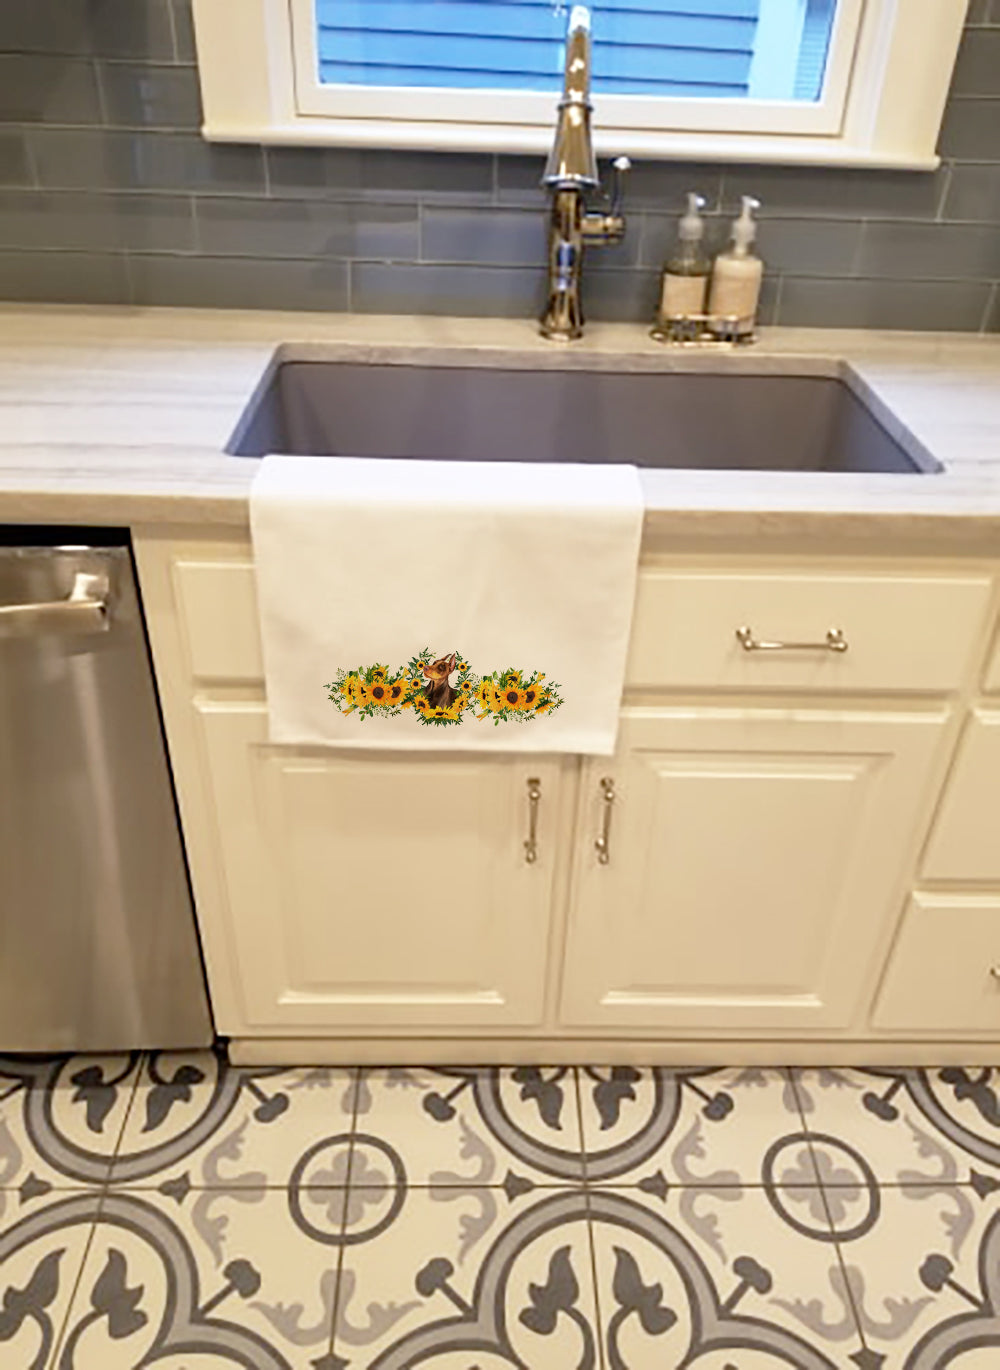 Buy this Doberman Pinscher in Sunflowers White Kitchen Towel Set of 2